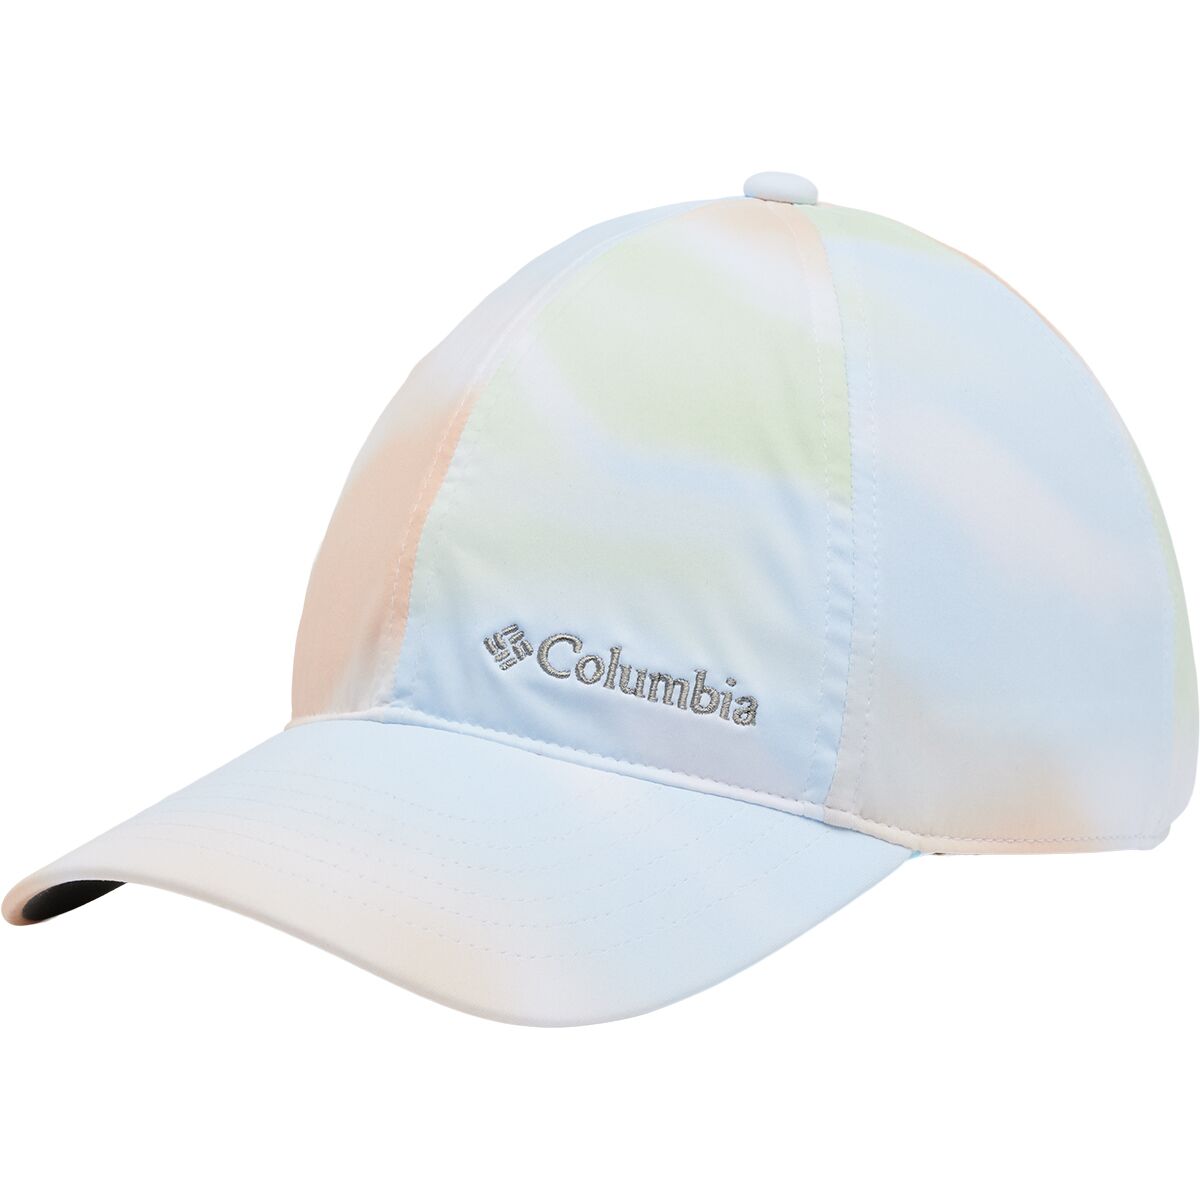 Бейсбольная кепка coolheaded ii Columbia, цвет white/undercurrent print